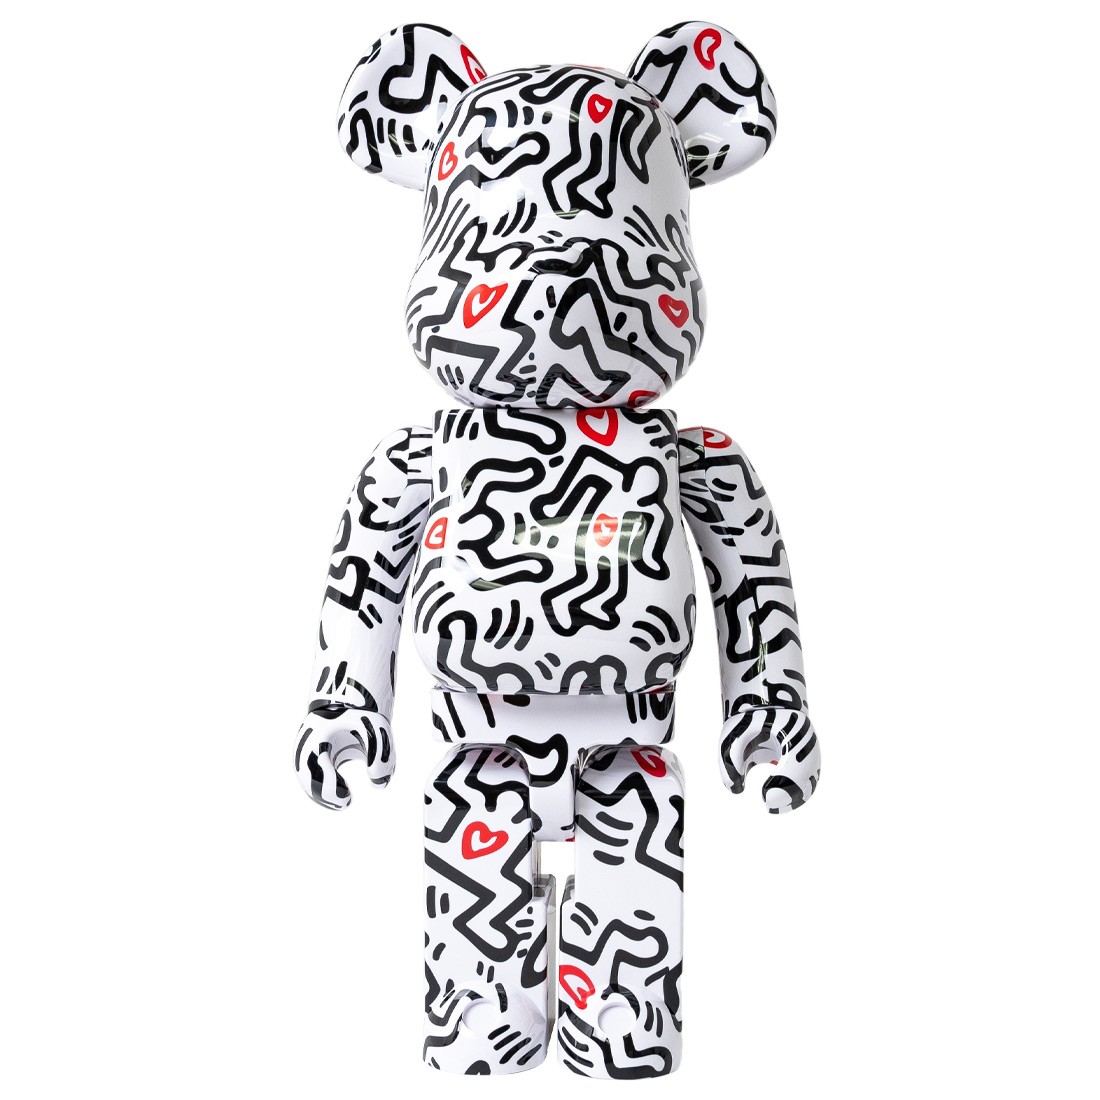 Medicom Keith Haring #8 1000% Bearbrick Figure (white)